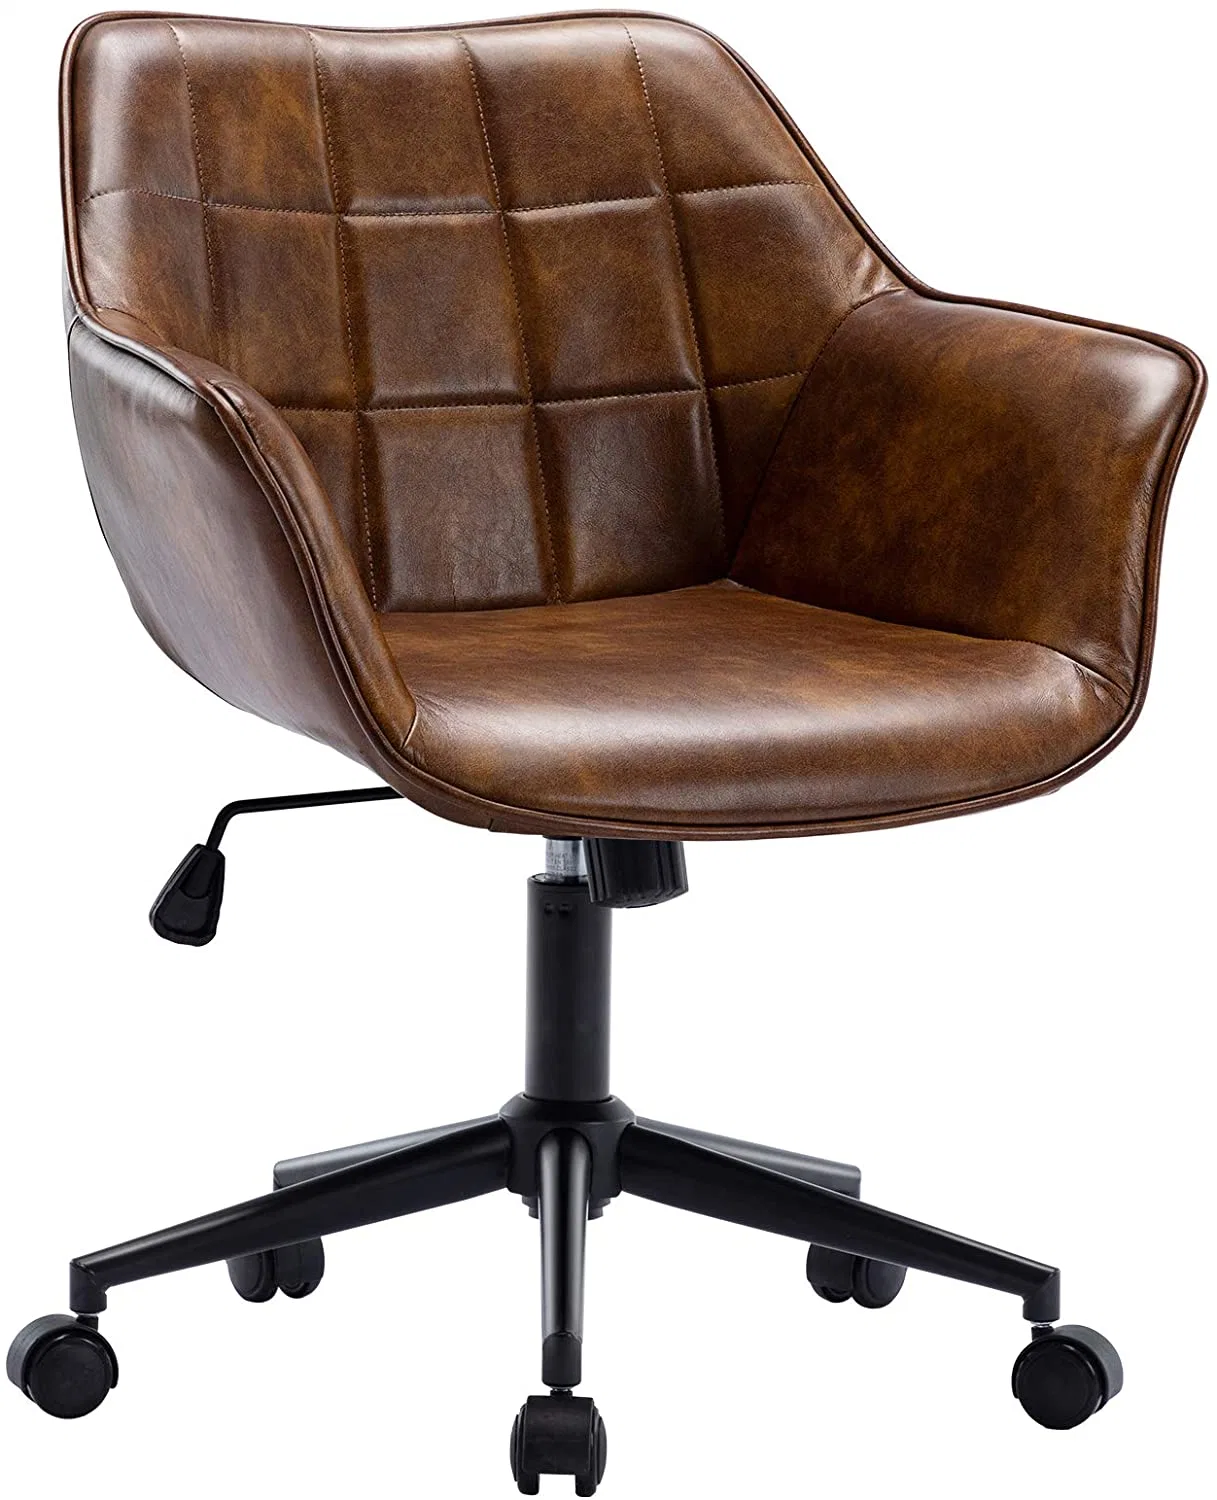 Niedriger Preis Büromöbel Stuhl Drehbar 200 Kg Niedrige Rücken Nordic Home Verstellbare Computer Stühle Leder Bürostuhl Verkauf Produkte